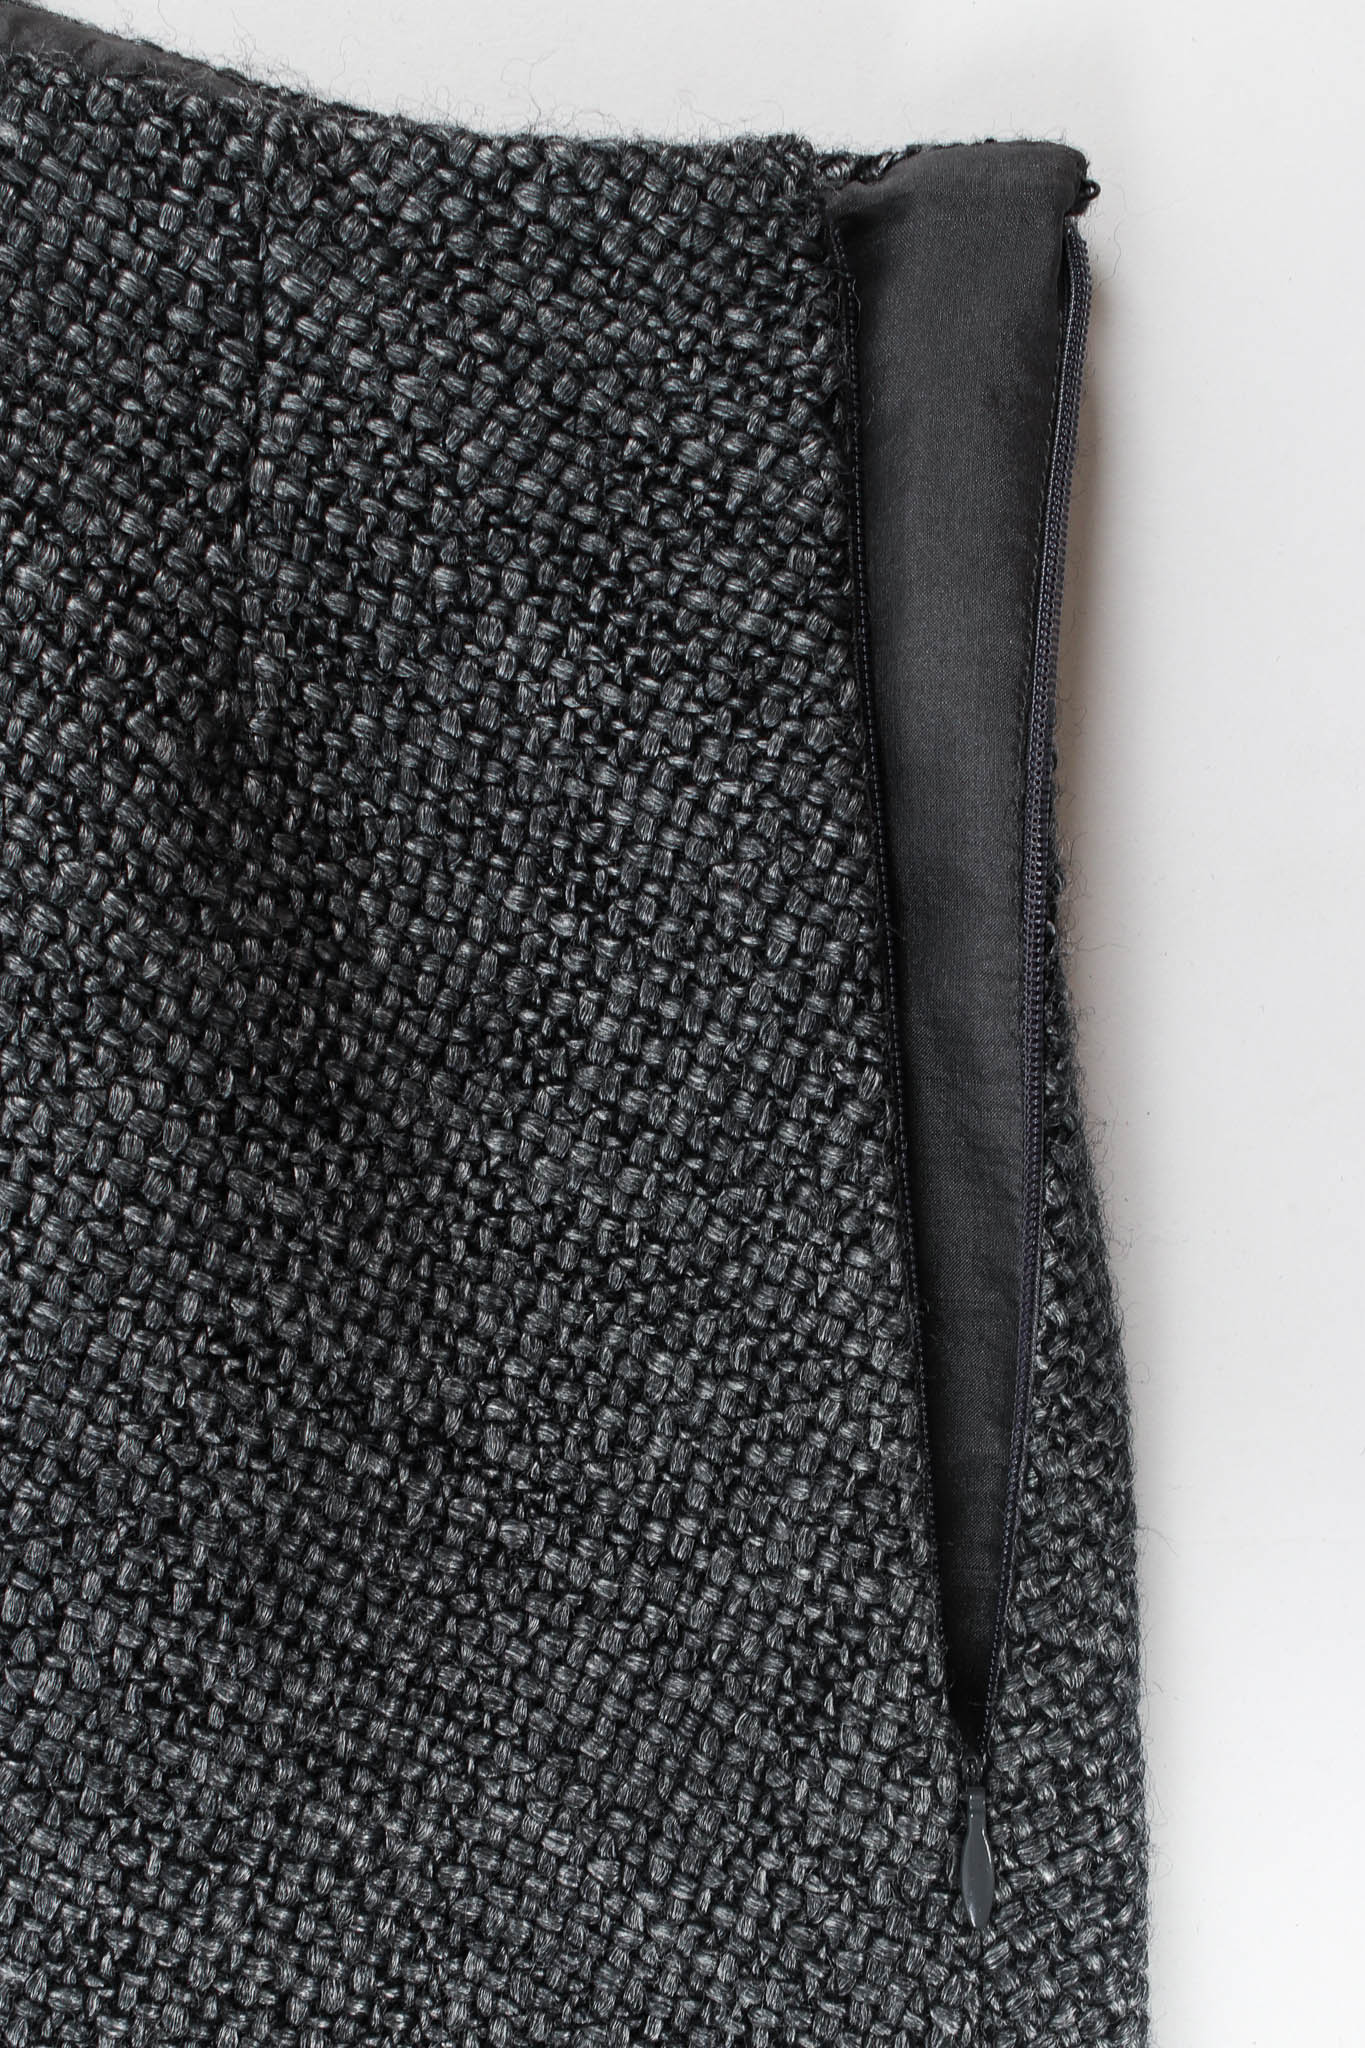 Vintage Chanel Tweed Woven Wool Top & Skirt Set skirt zipper @ Recess Los Angeles